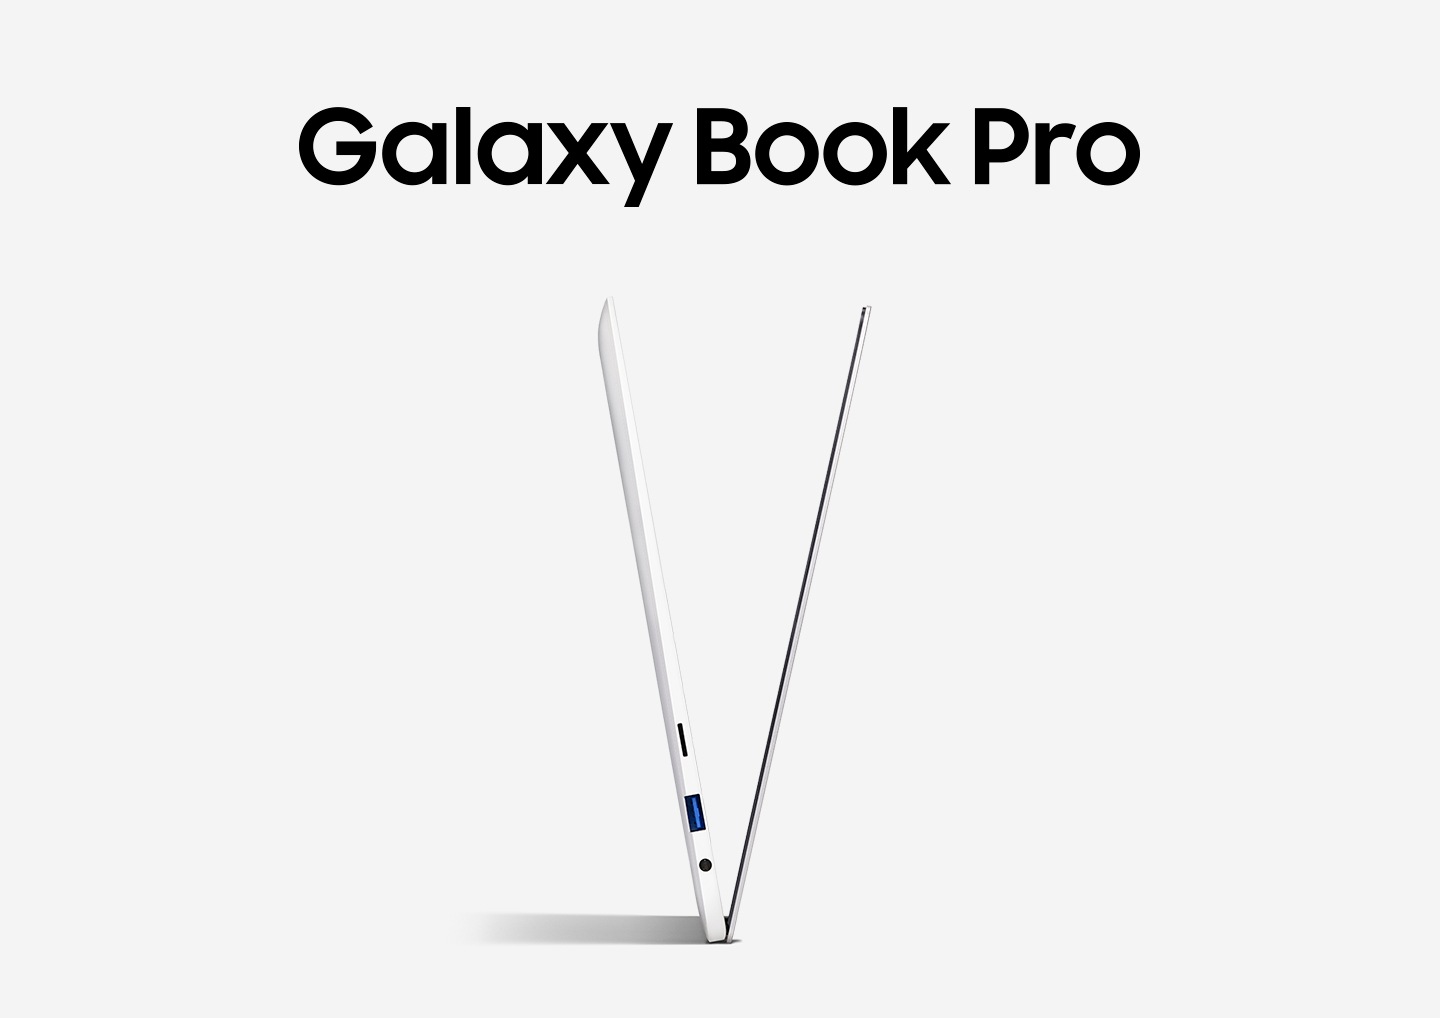 Galaxy Book Pro dibuka kepada langit V -shaped